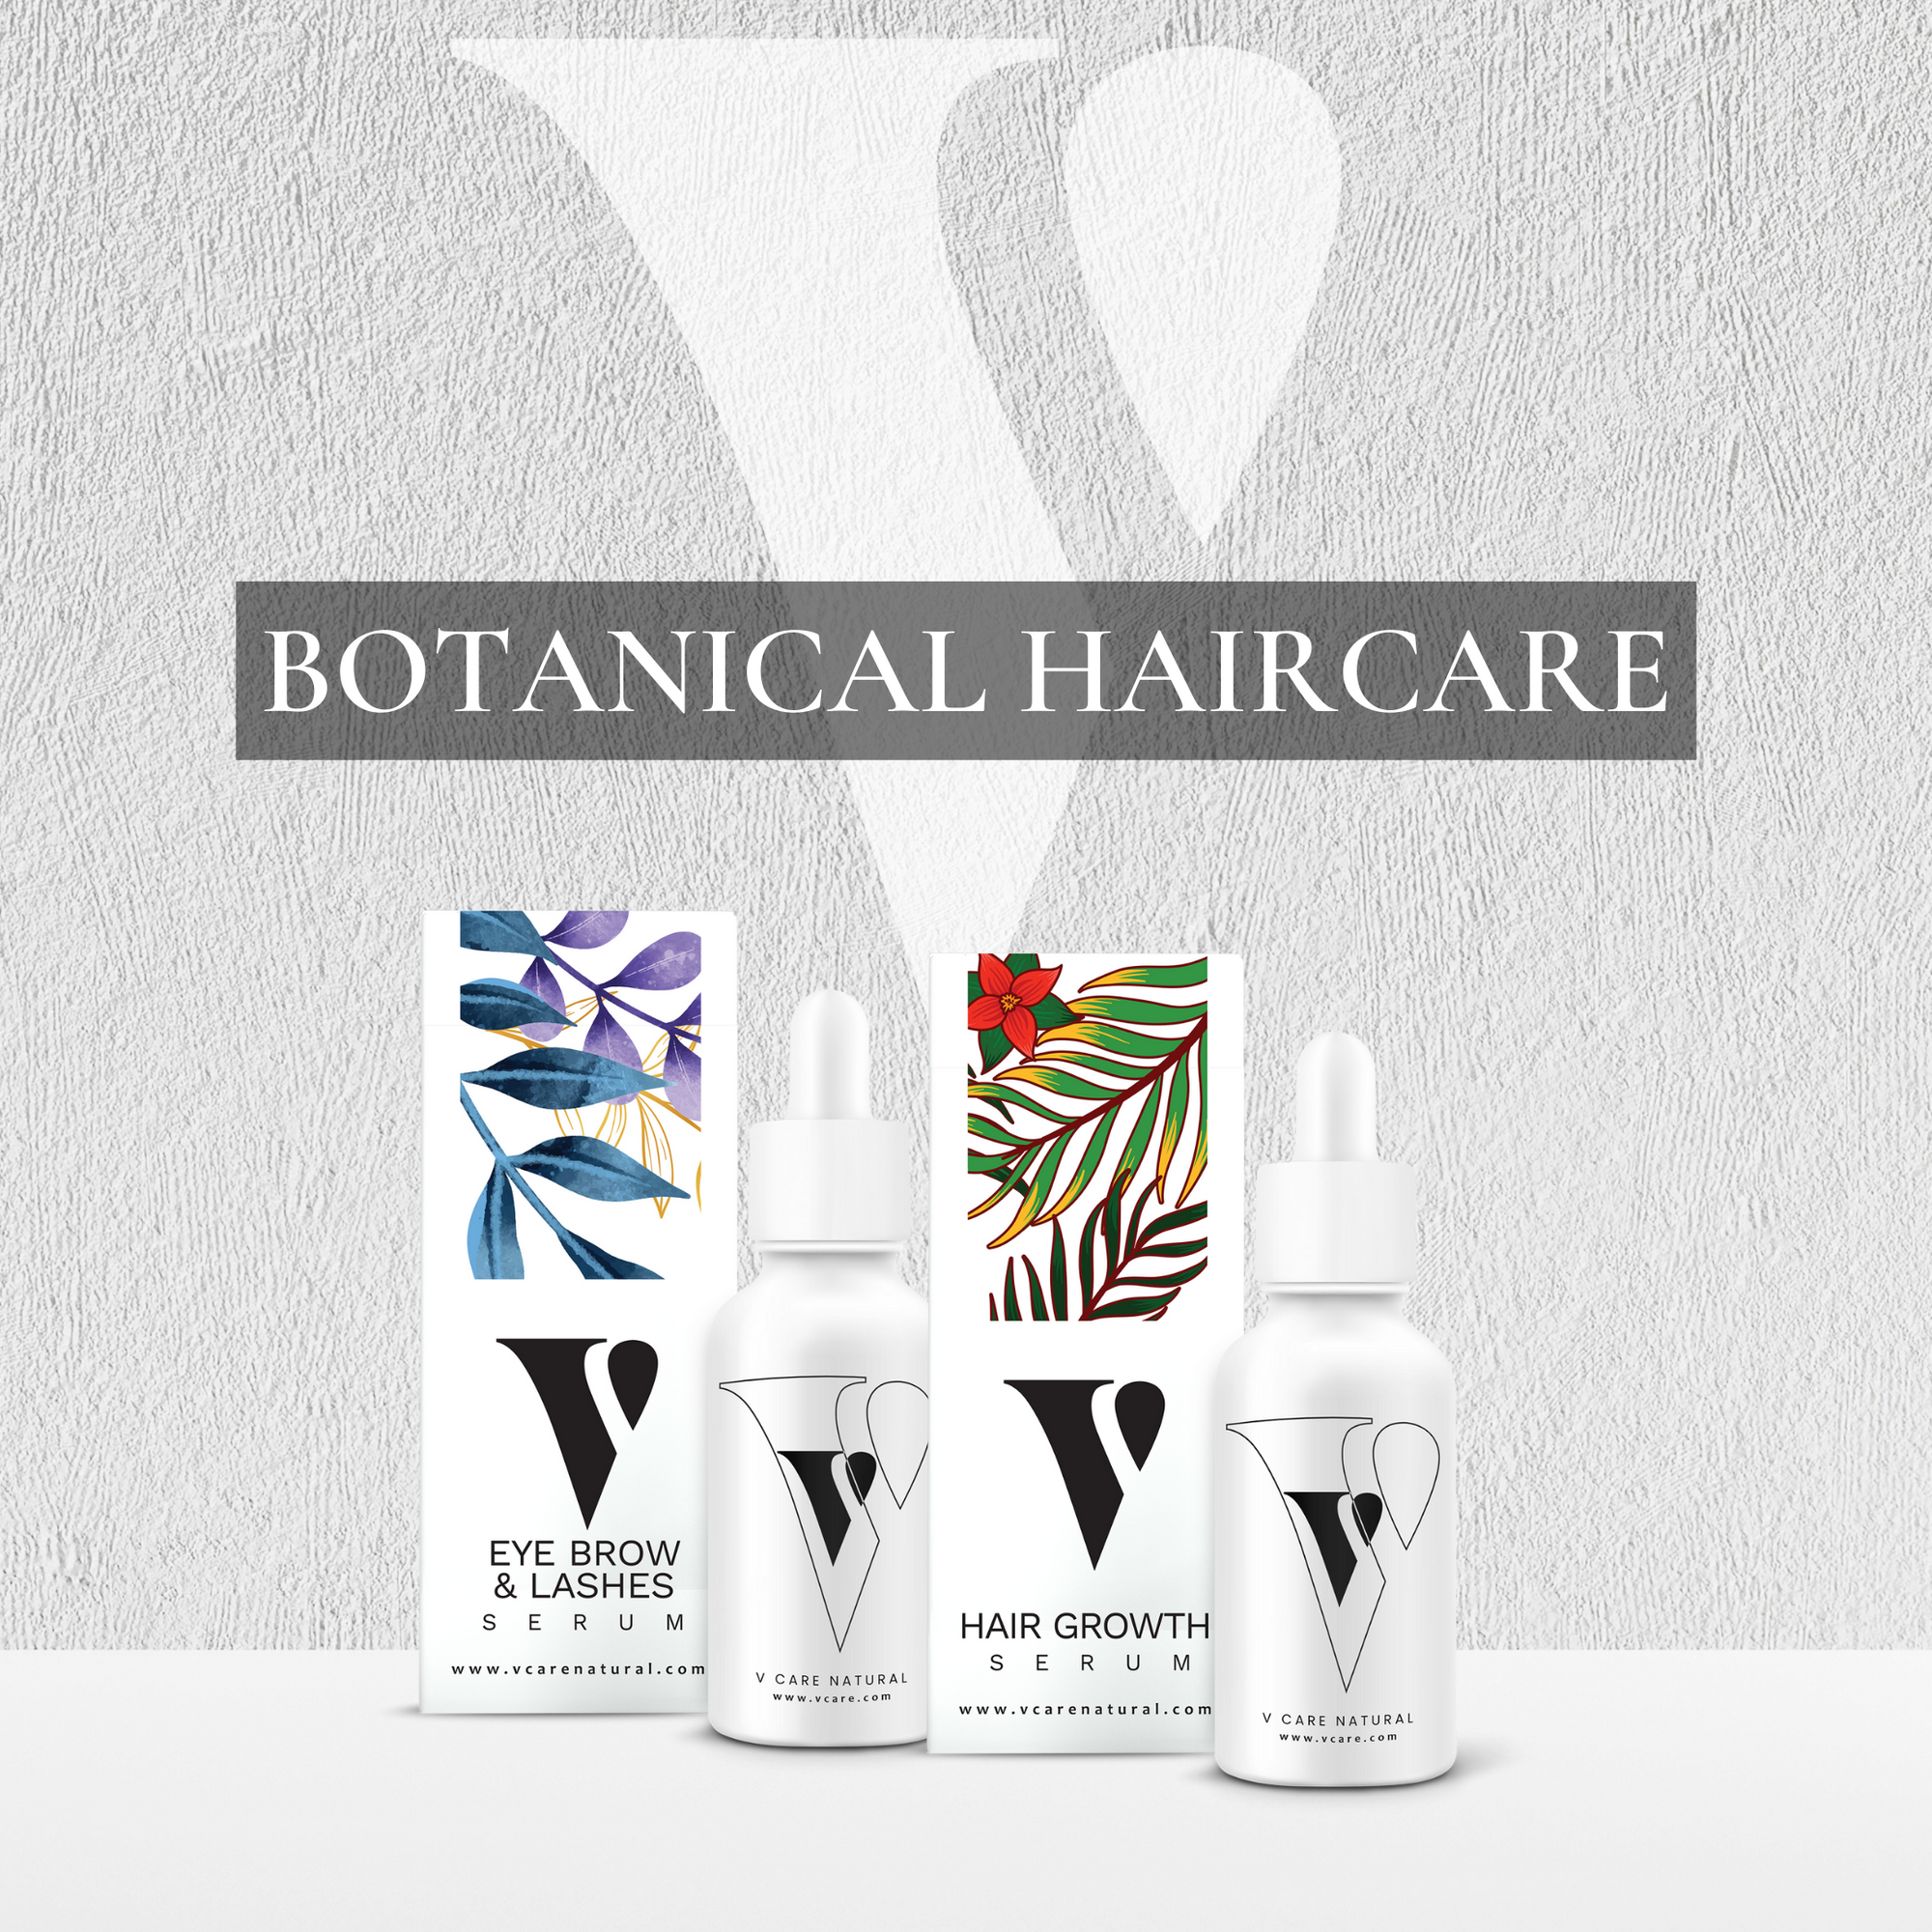 VCARE Botanical Haircare